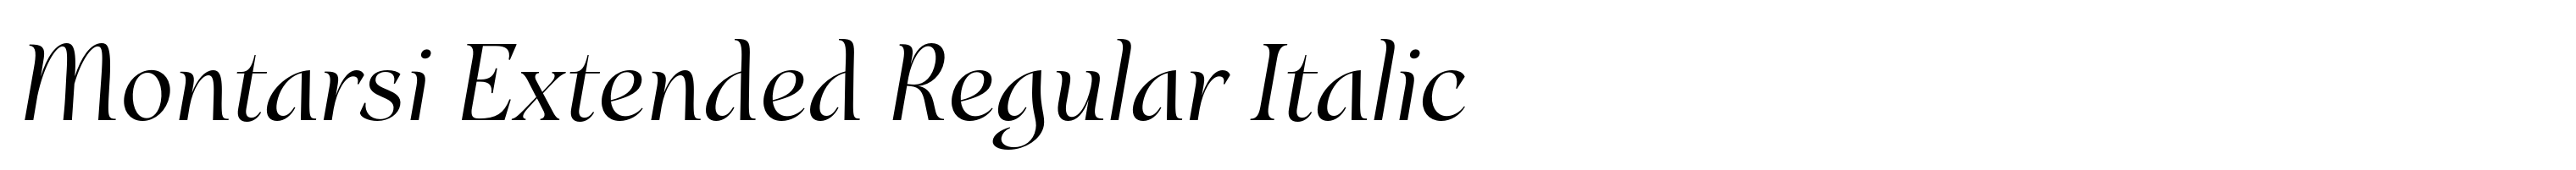 Montarsi Extended Regular Italic